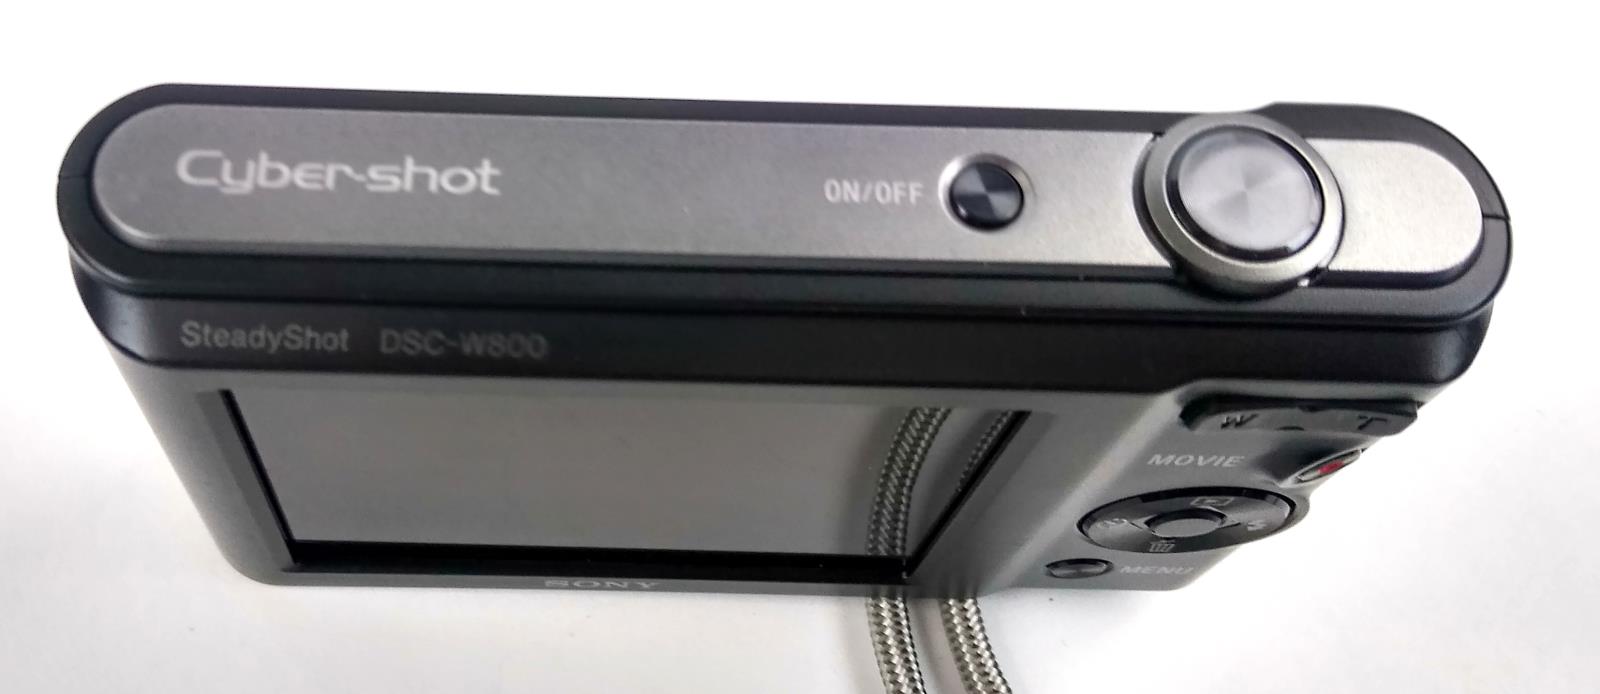 Sony Cyber-shot DSC-W800 20.1MP Digital Camera 720P 5x Zoom Black | eBay